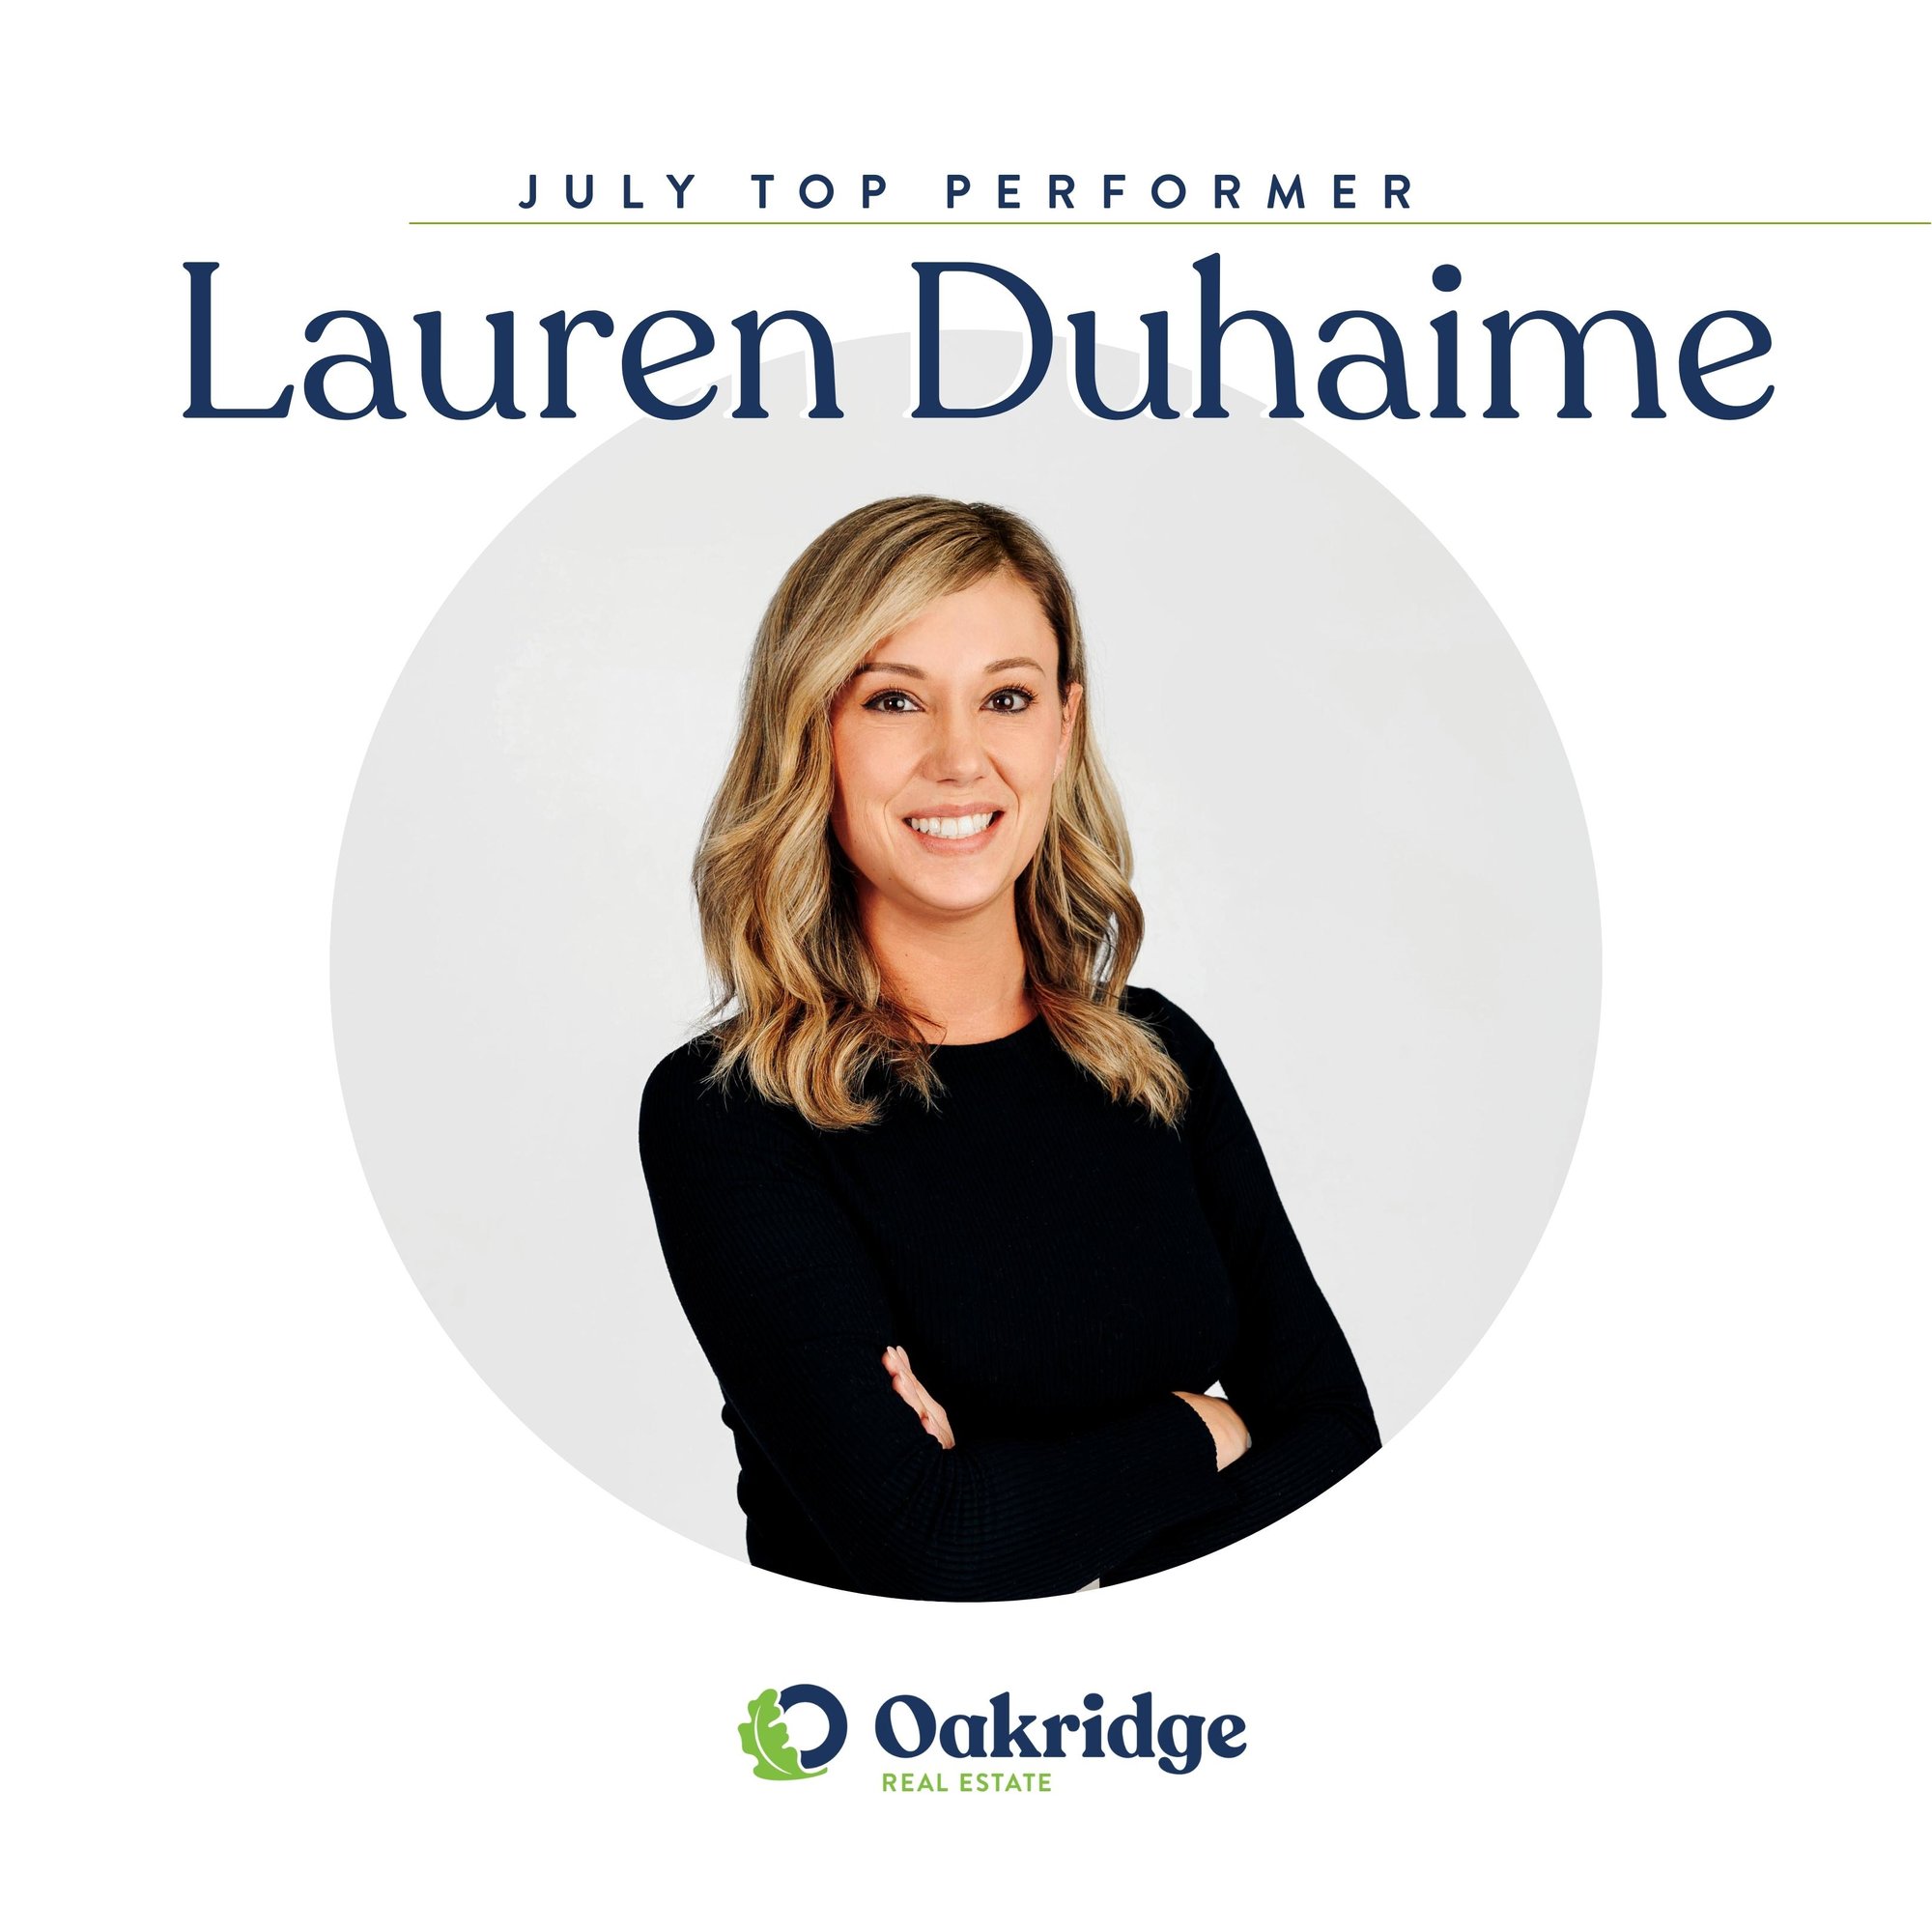 Lauren Duhaime July Top Performer | Oakridge Real Estate